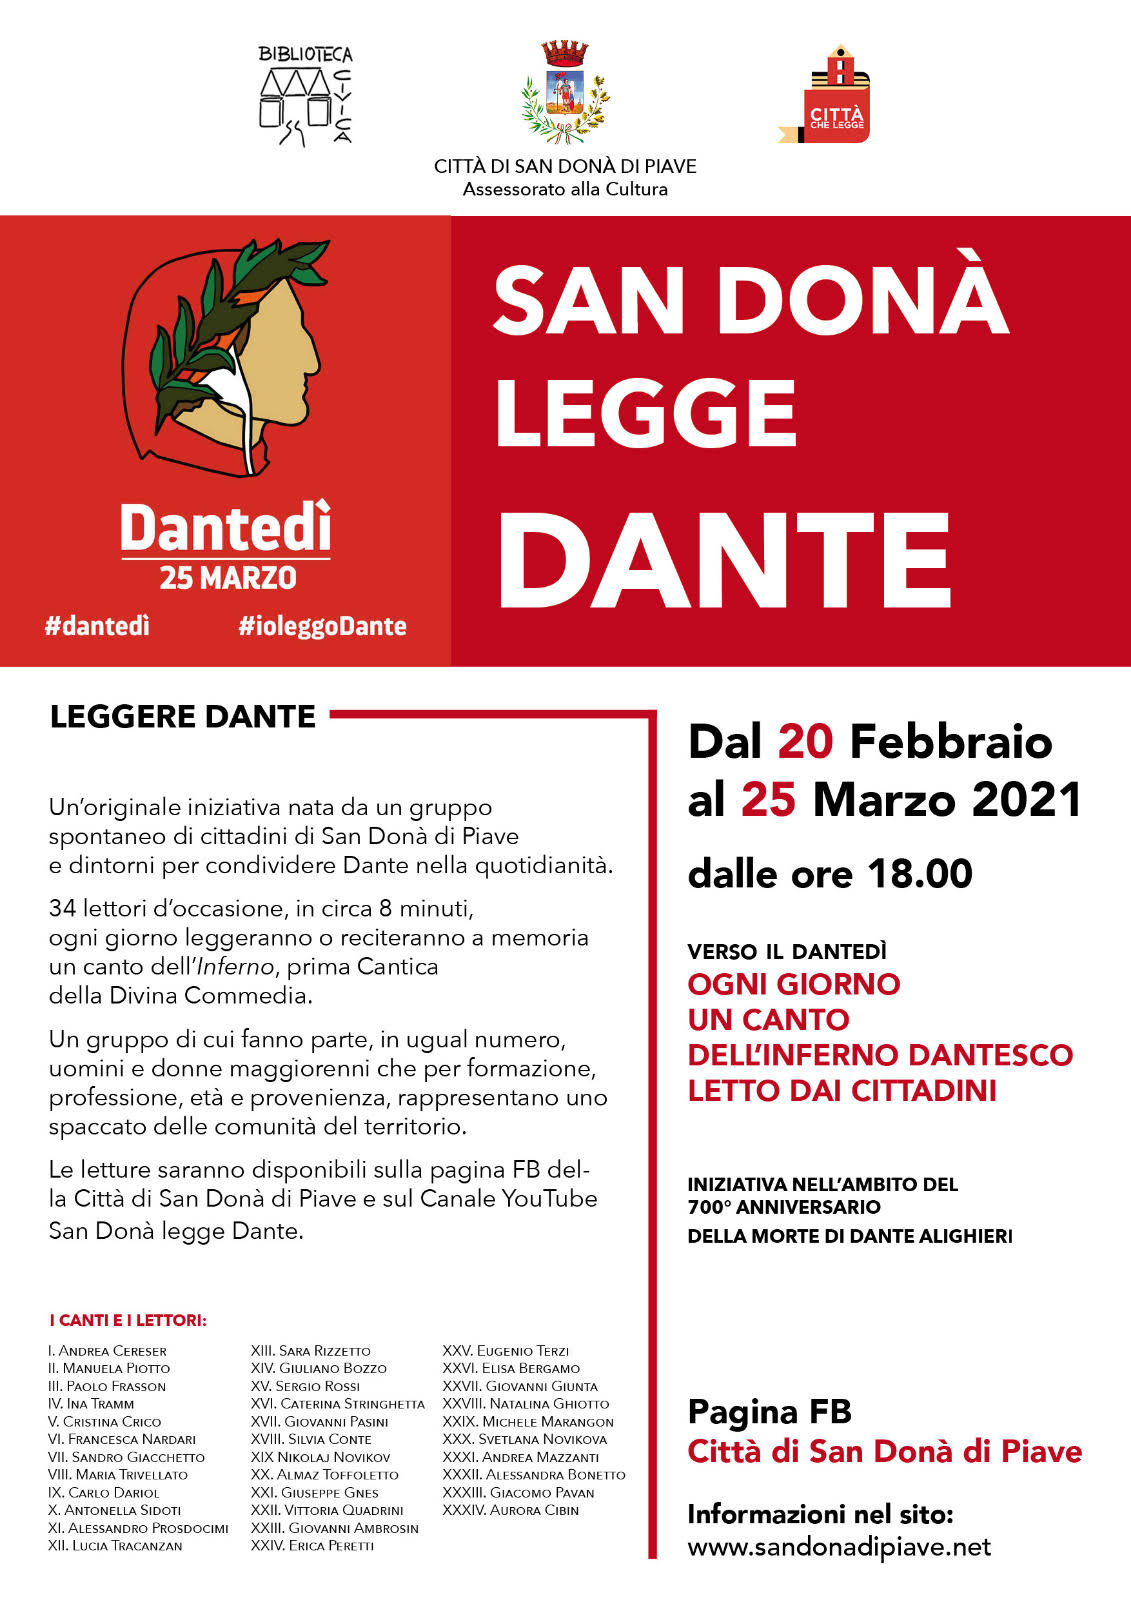 Immagine #Danteday: San Donà reads Dante